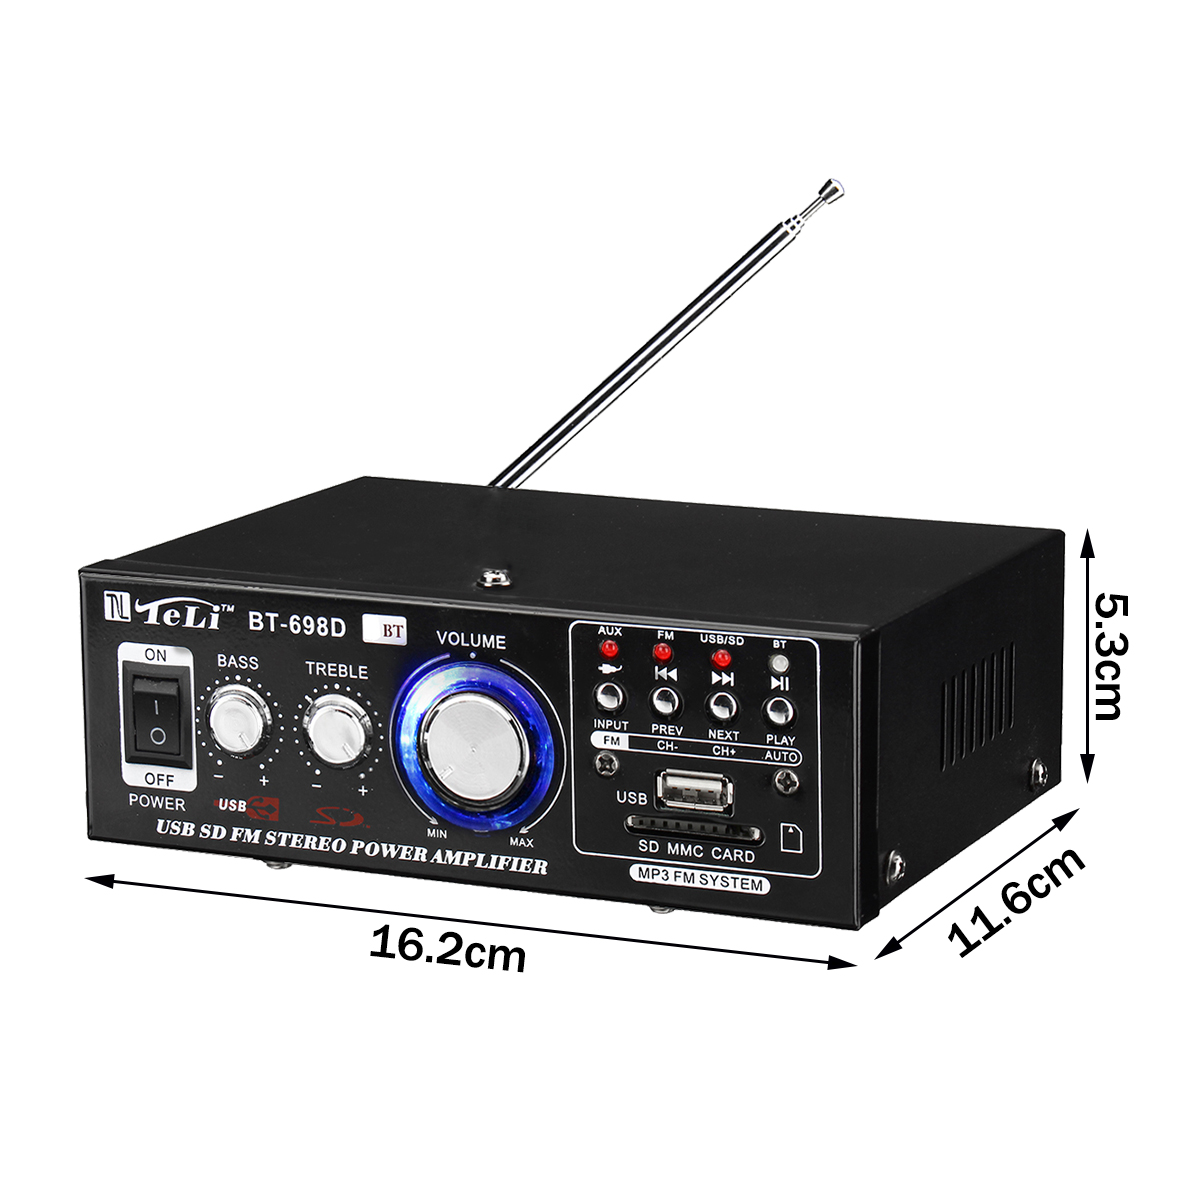 USB-SD-HIFI-Power-Amplifier-HiFi-Digital-Audio-Stereo-Amplifier-bluetooth-FM-Radio-Equipment-1423186-10